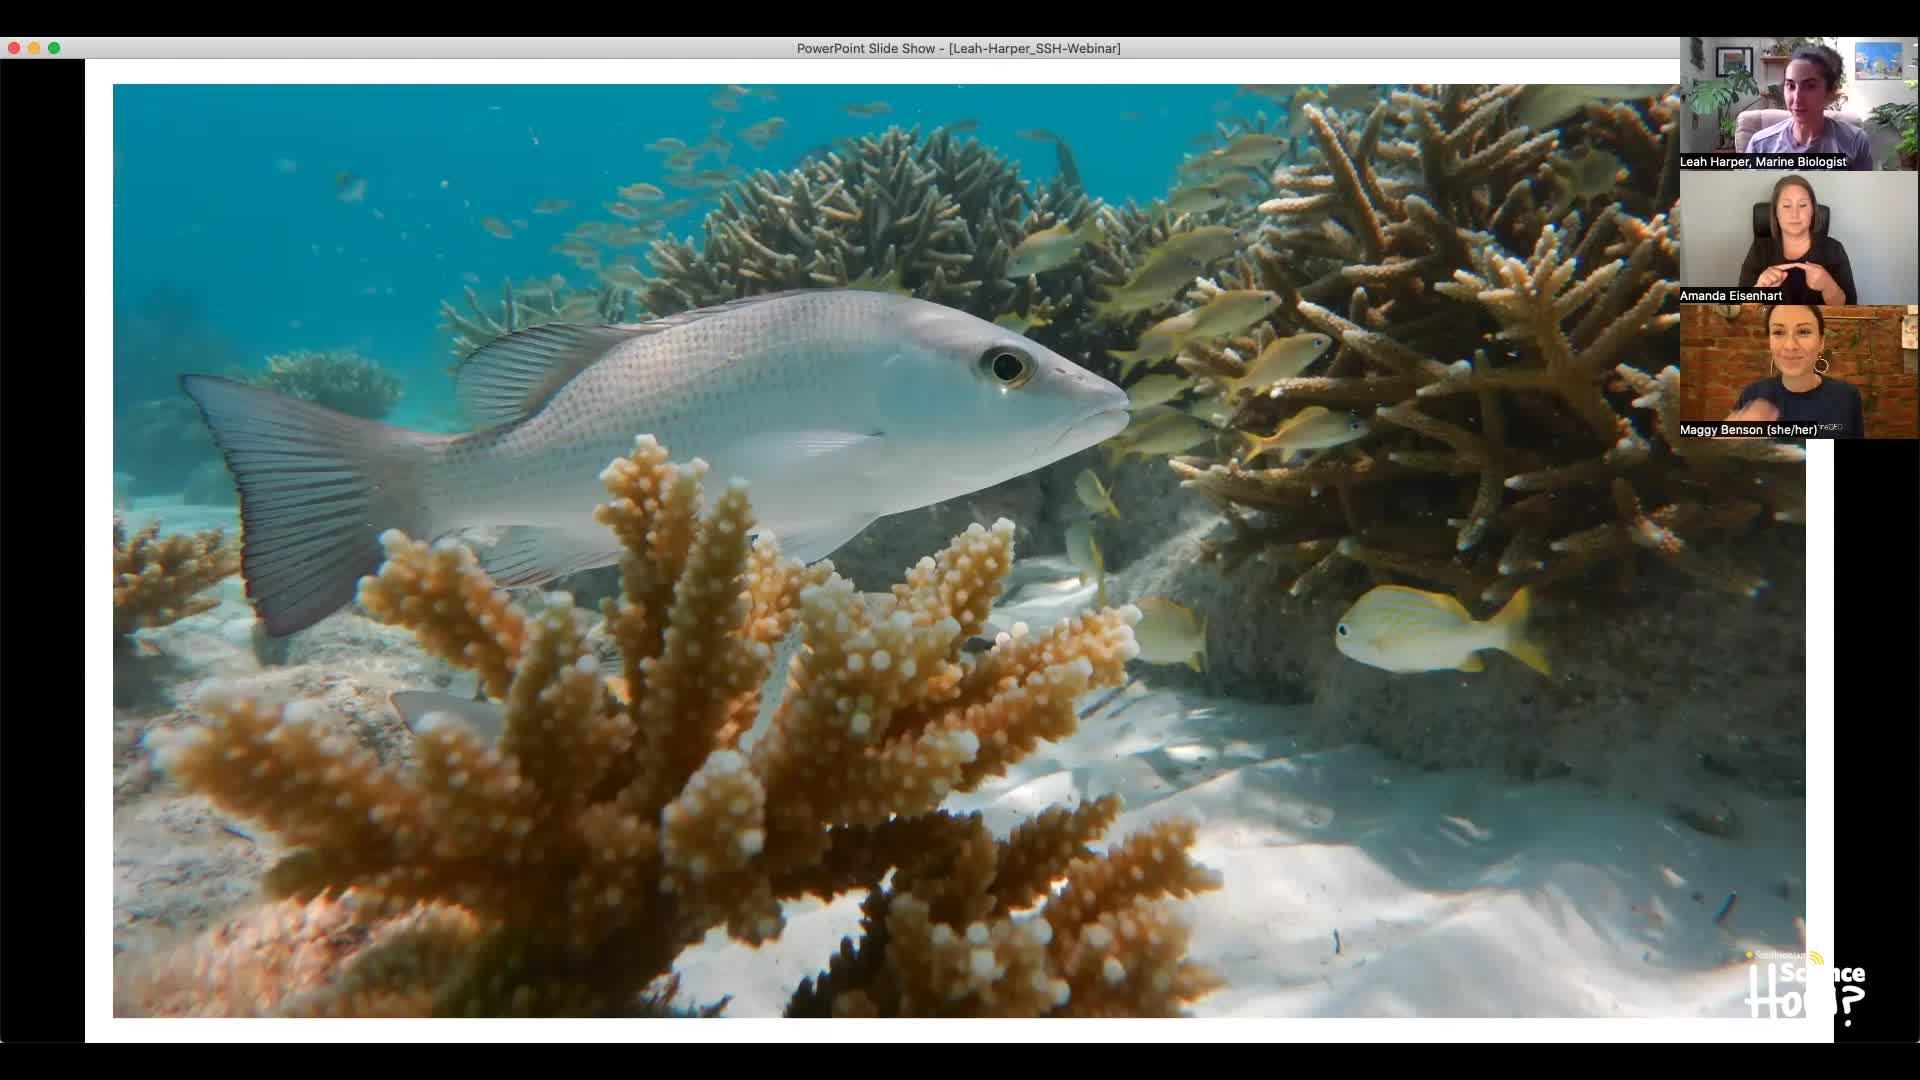 Webinar: Tracking Coral Health in the Caribbean Sea